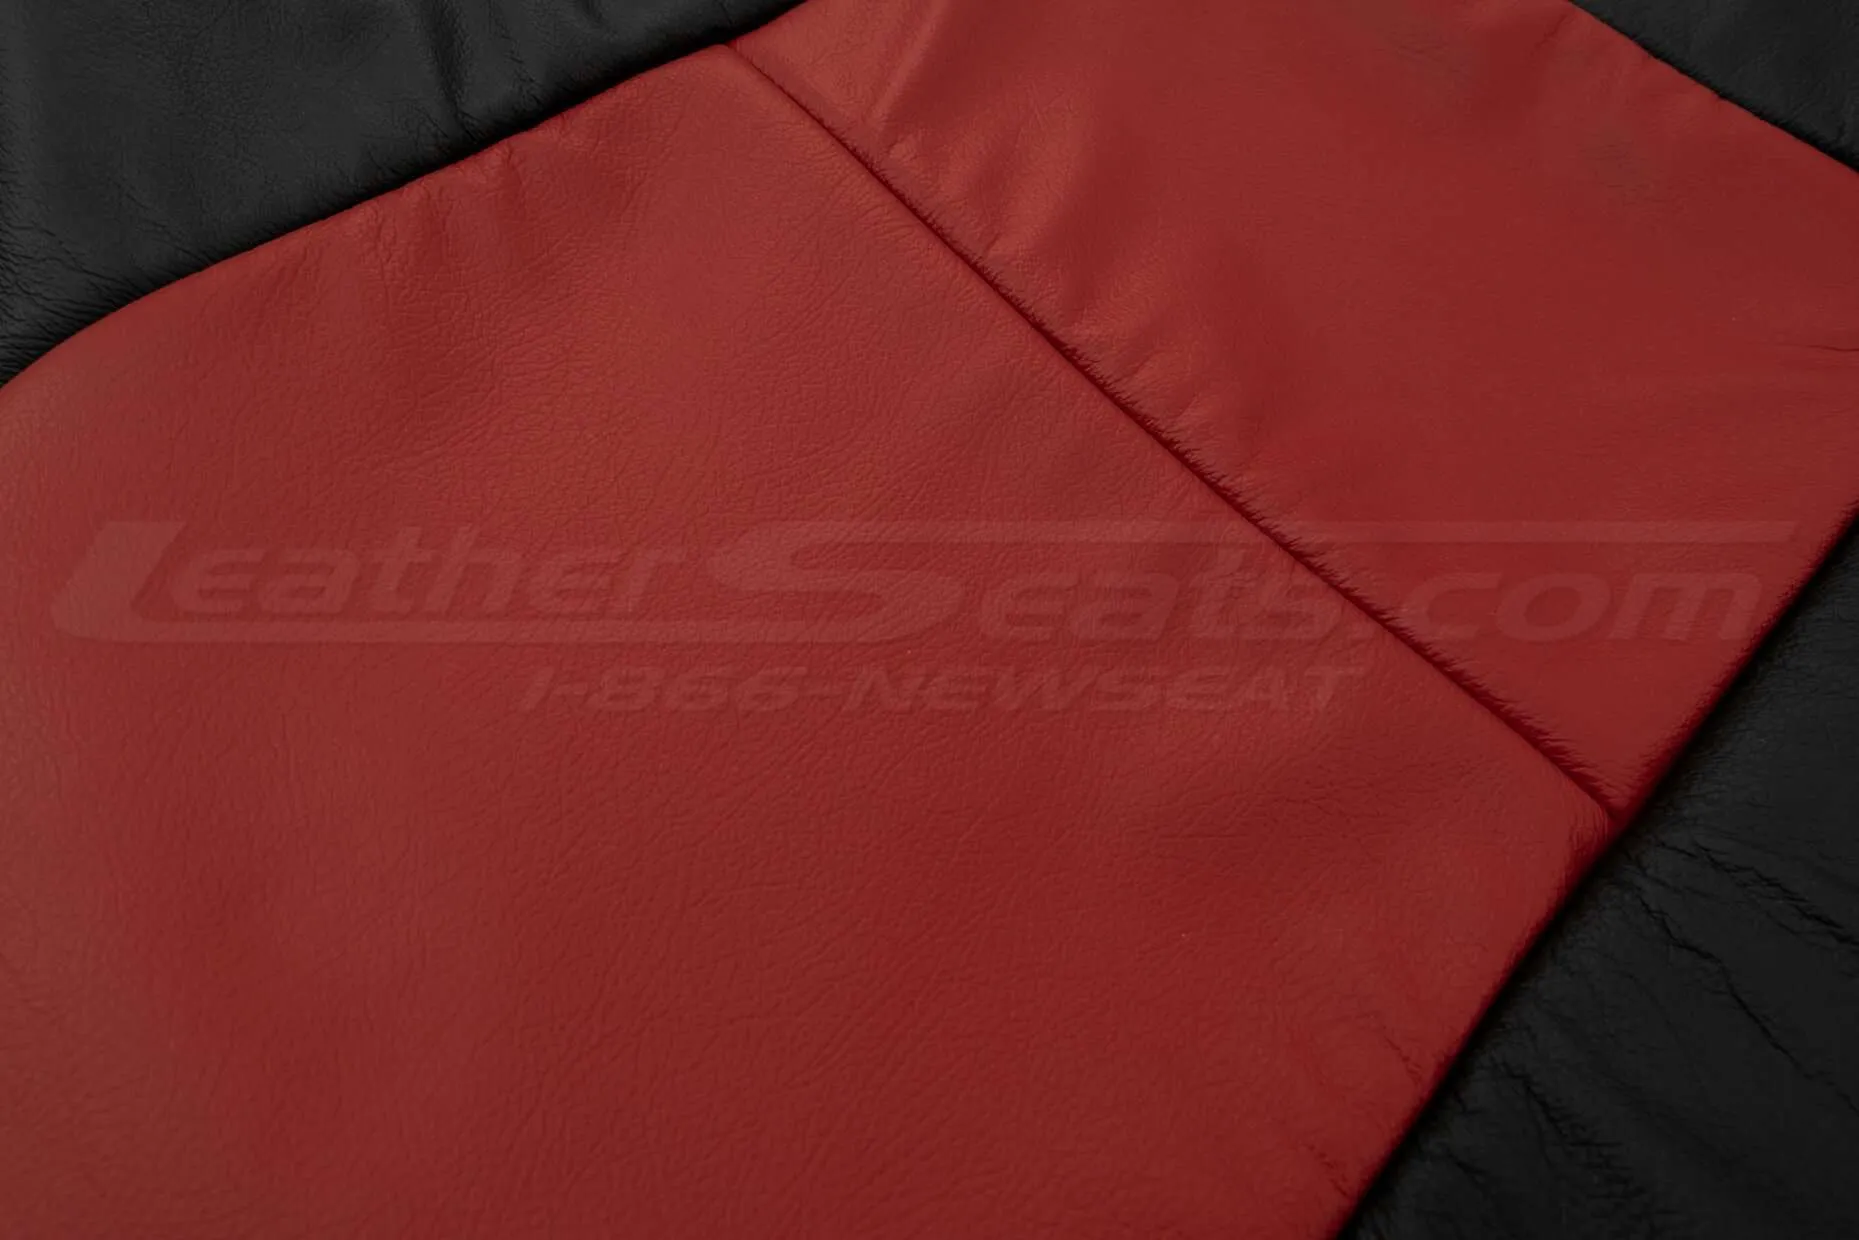 Pontiac G8 Leather Kit - Black & Red - Backrest insert close-up